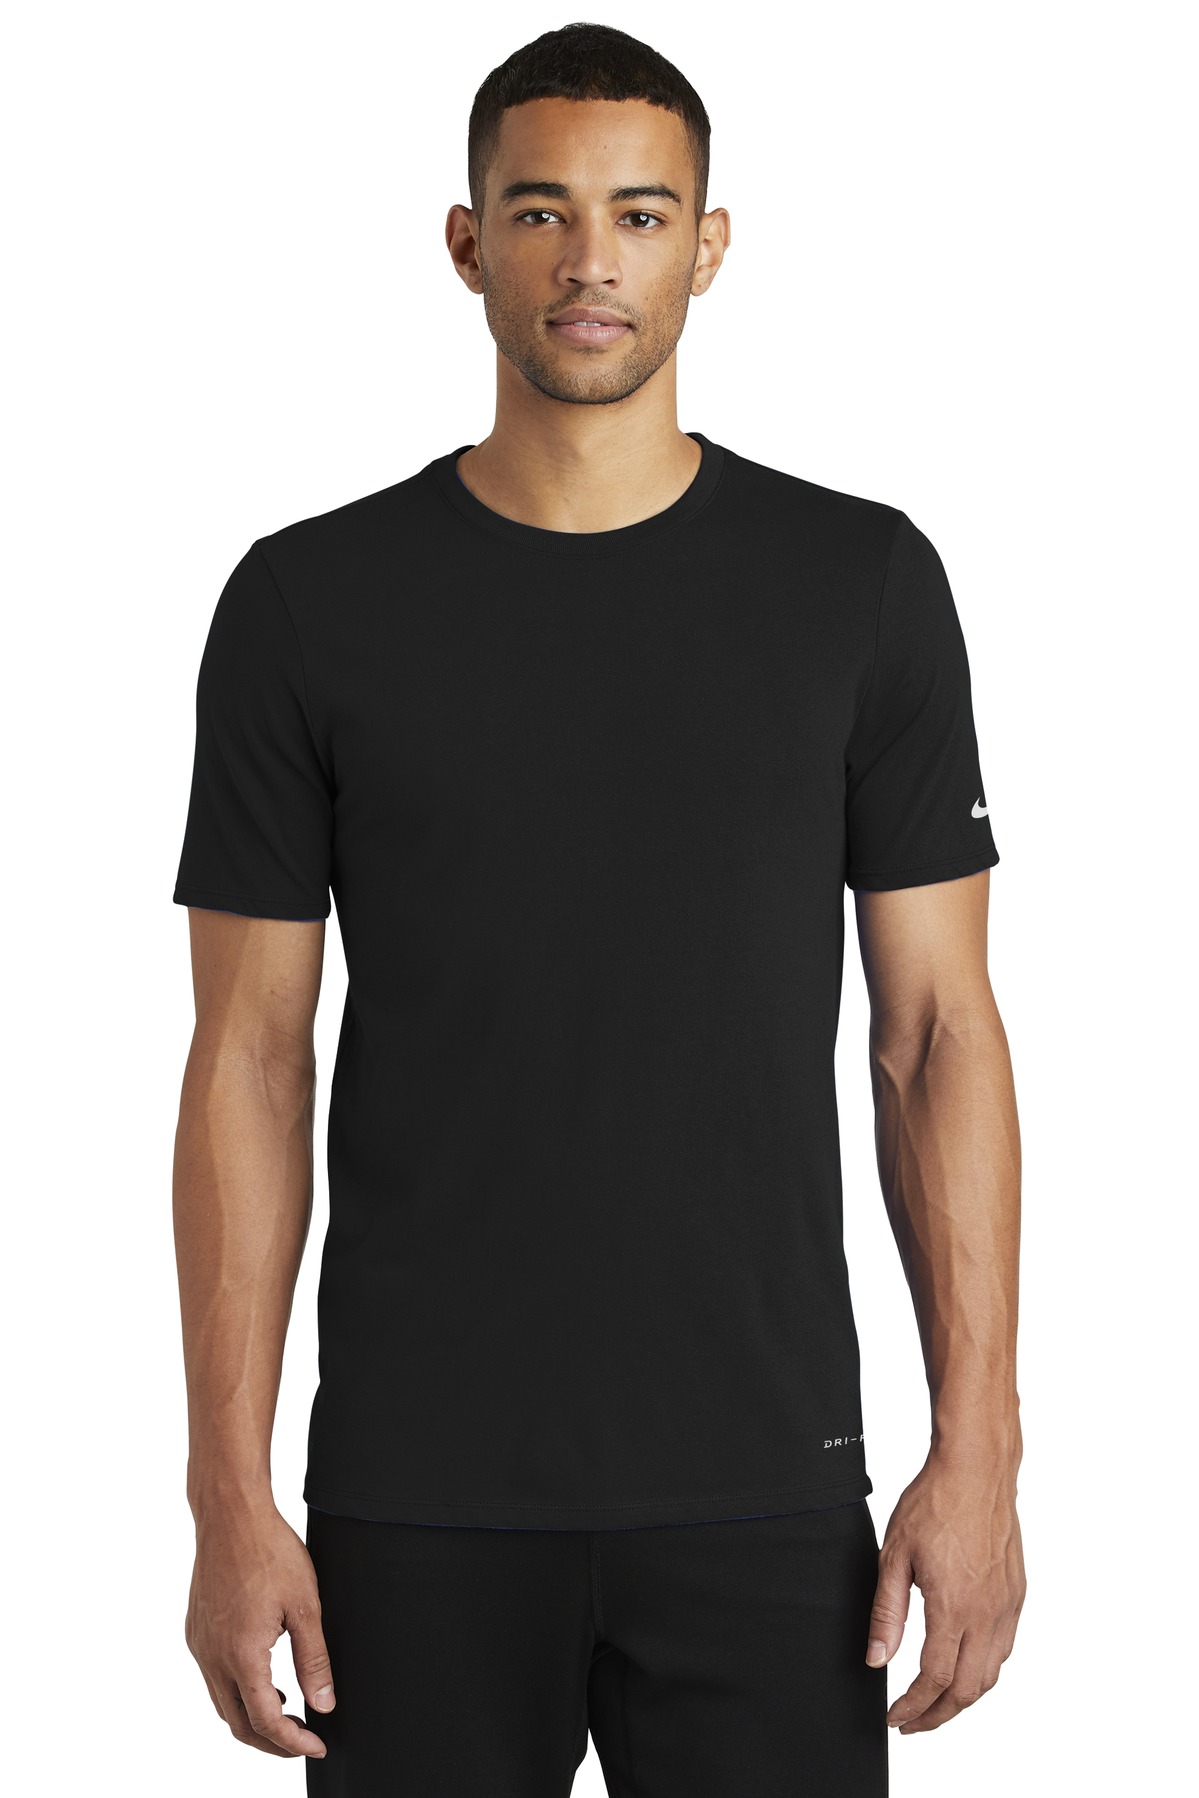 Nike Hospitality T-Shirts Dri-FIT Cotton/Poly Tee.-Nike